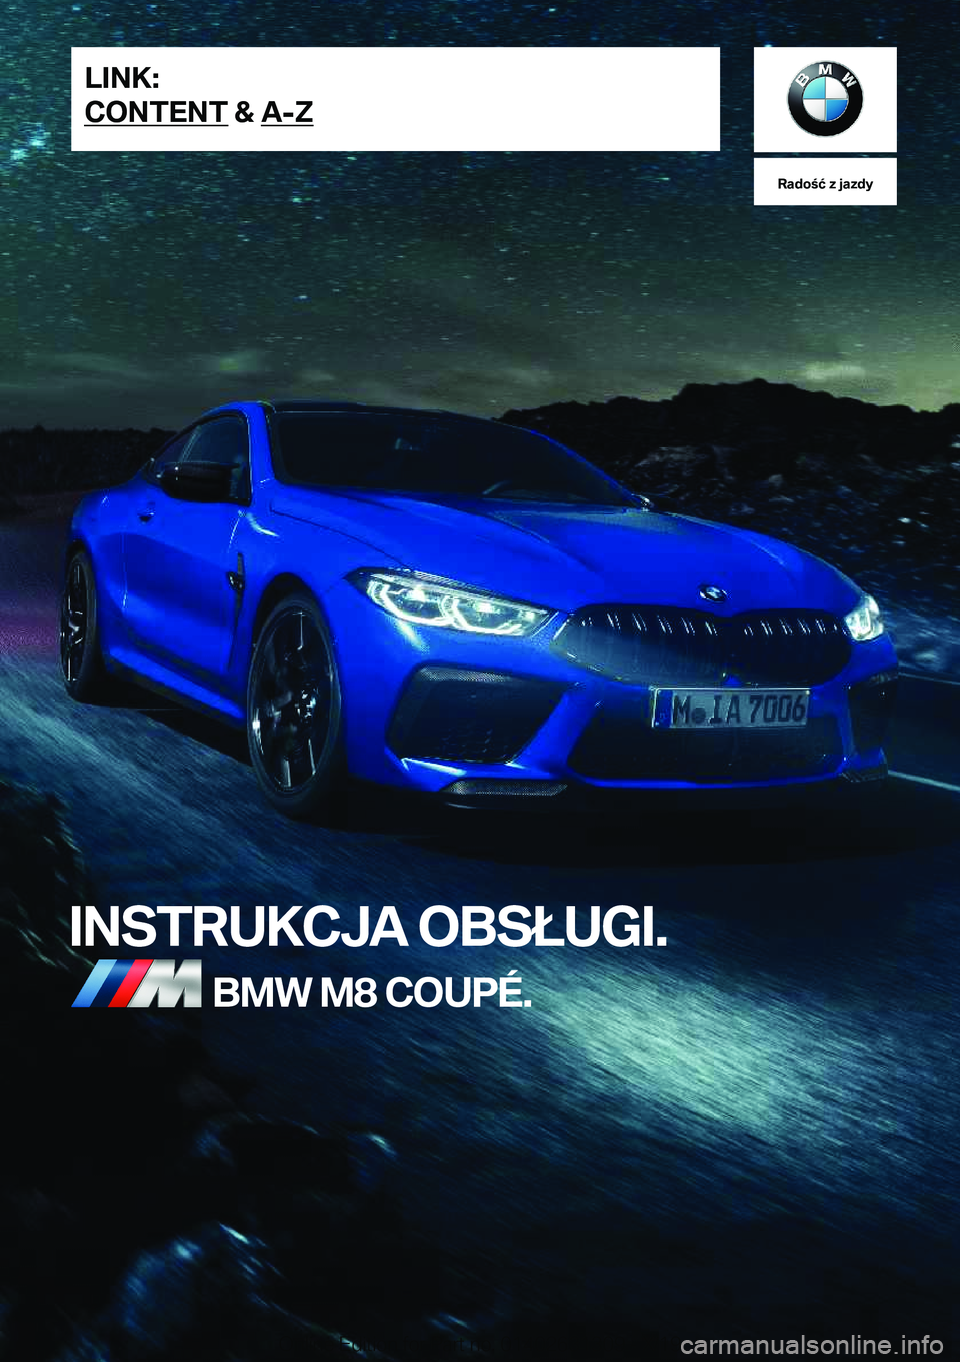 BMW M8 2020  Instrukcja obsługi (in Polish) �R�a�d�o�ć��z��j�a�z�d�y
�I�N�S�T�R�U�K�C�J�A��O�B�S�Ł�U�G�I�.�B�M�W��M�8��C�O�U�P�